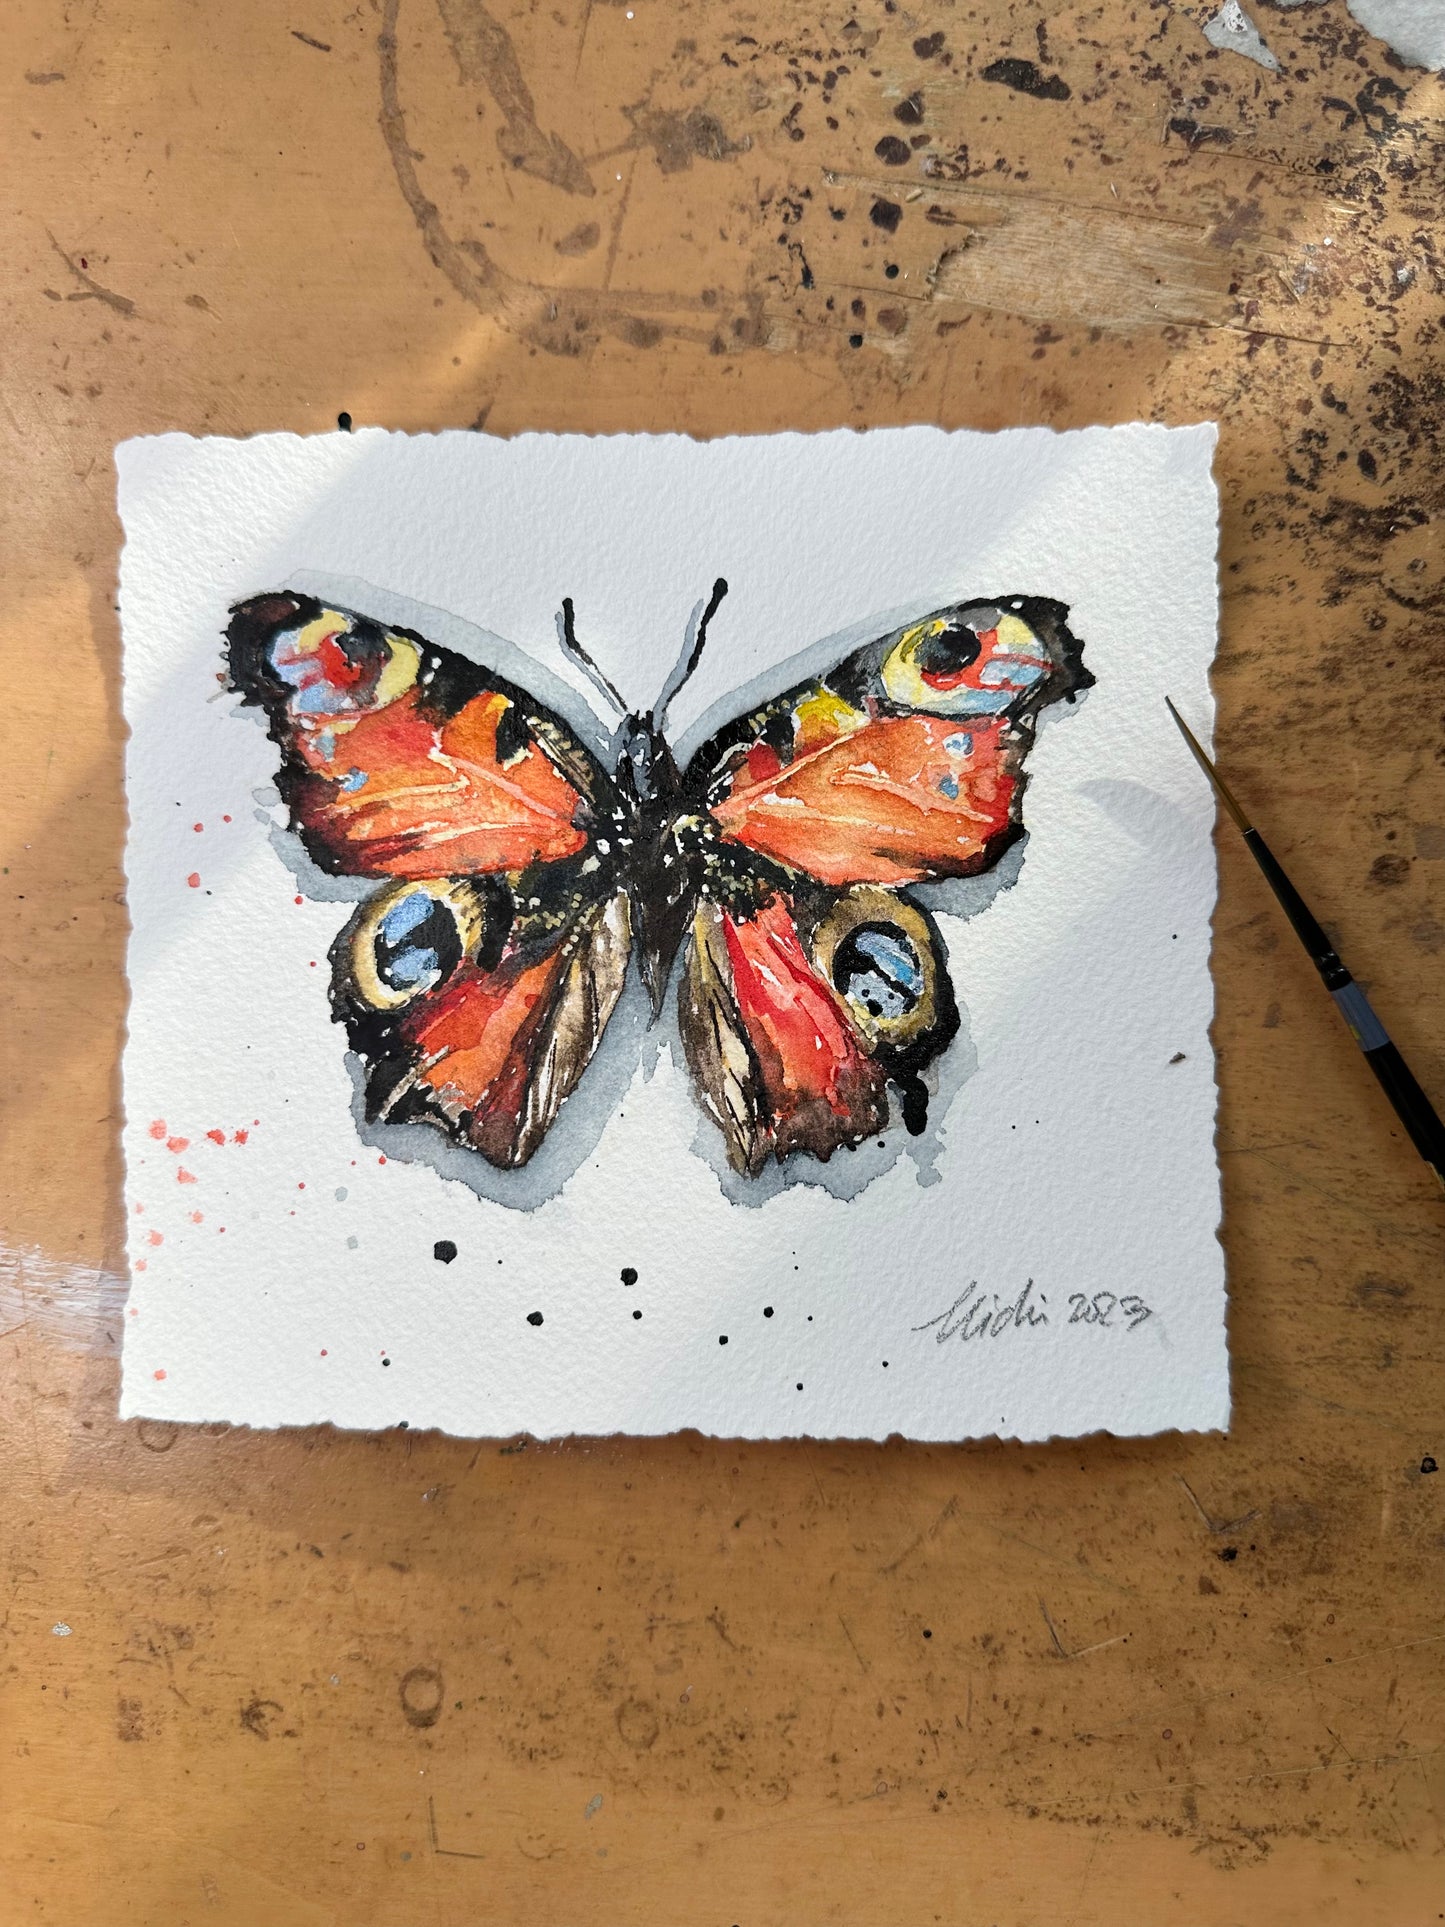 Aglais io / The Peacock Butterfly